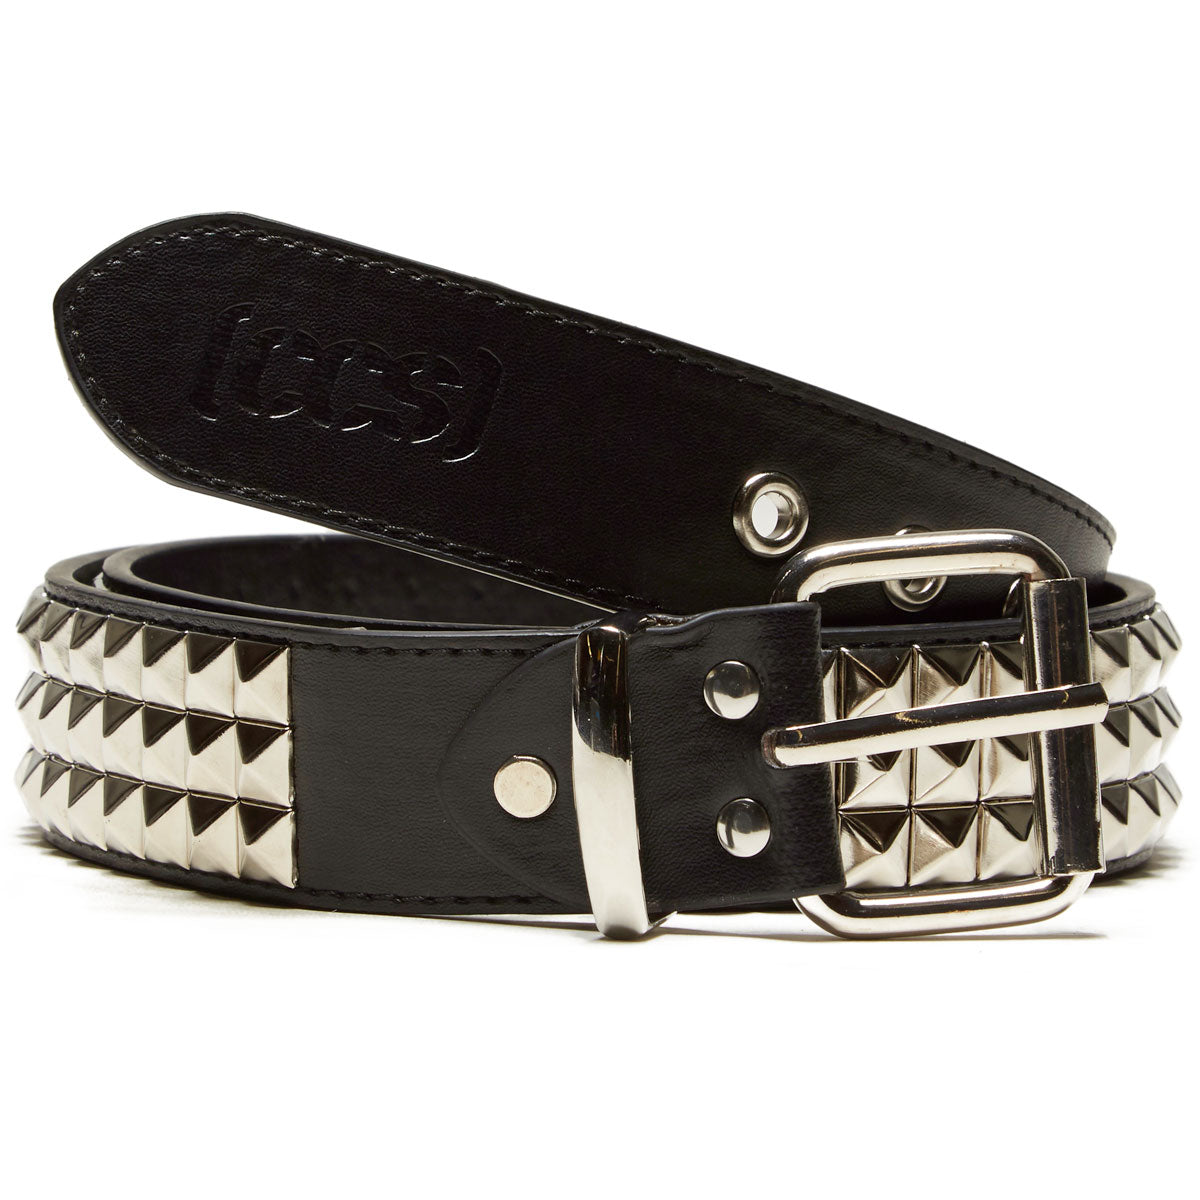 CCS Pyramid Studded Leather Belt - Black image 1